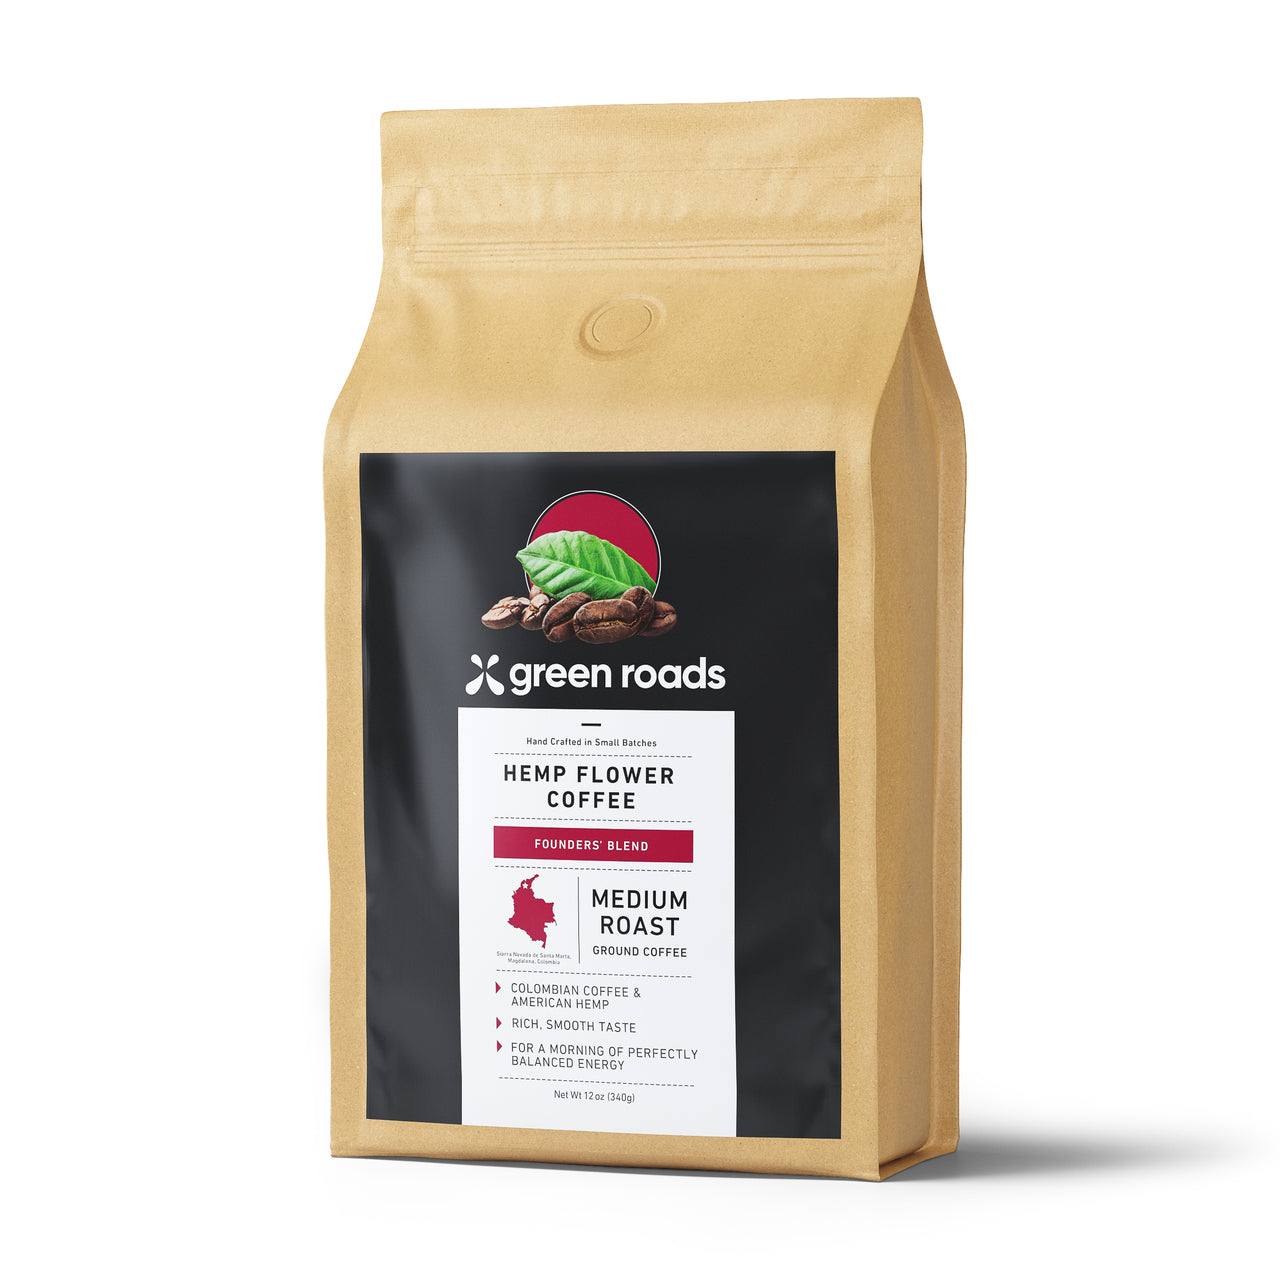 Hemp CBD Coffee - Medium Roast Founders Blend Hemp Flower Coffee 12 oz bag